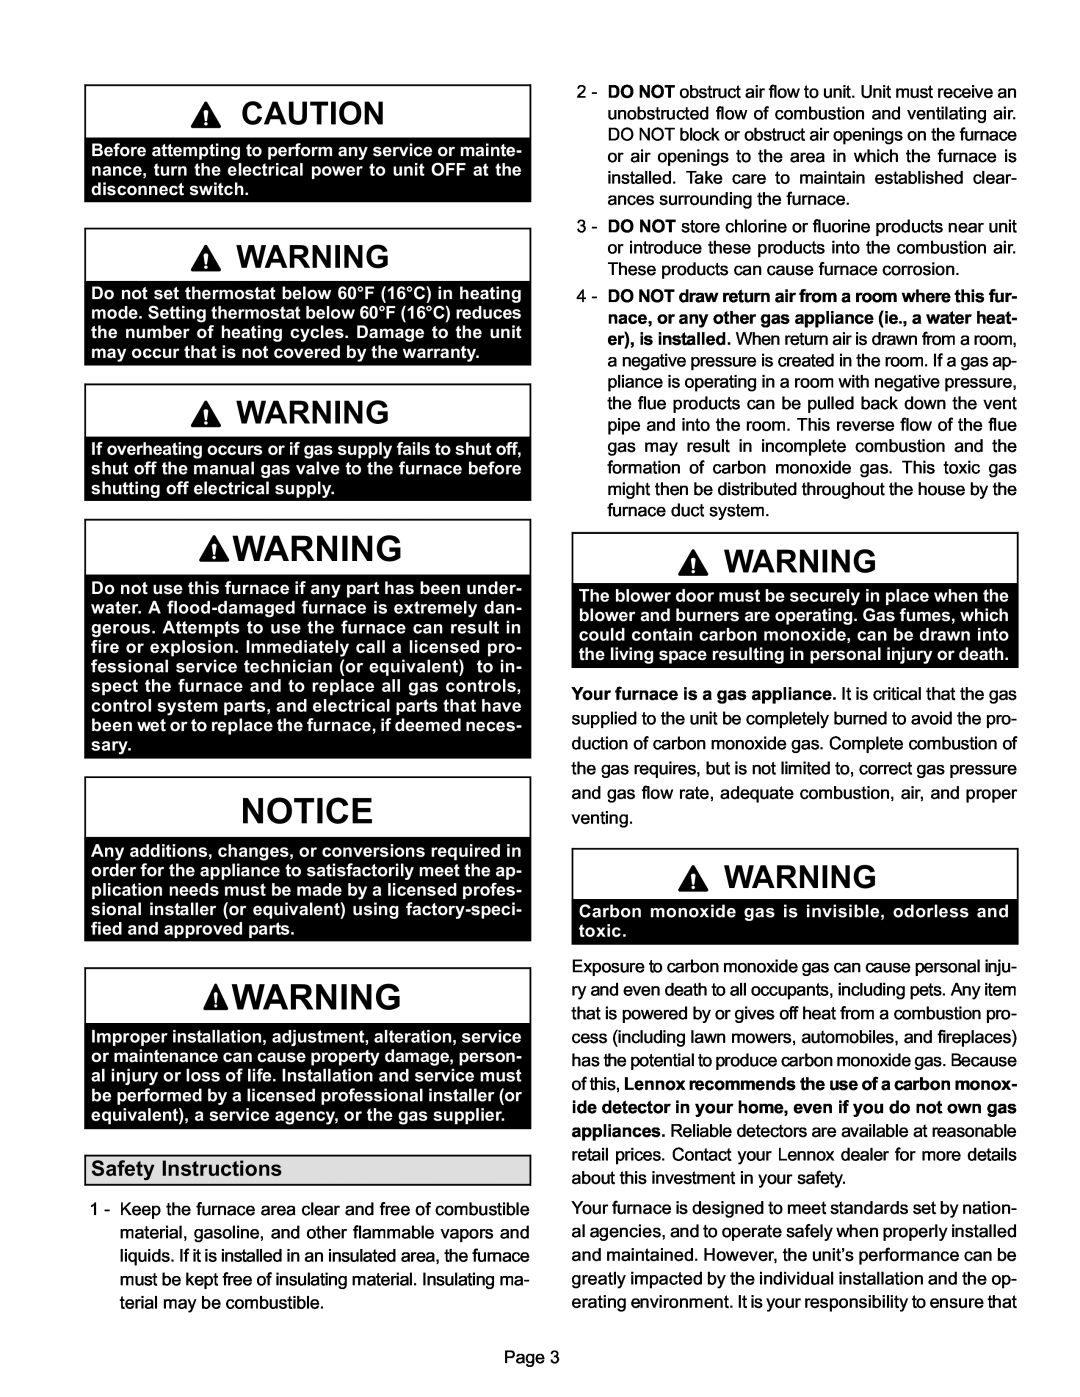 Lennox International Inc ML180UHE, Gas Furnace manual Safety Instructions 